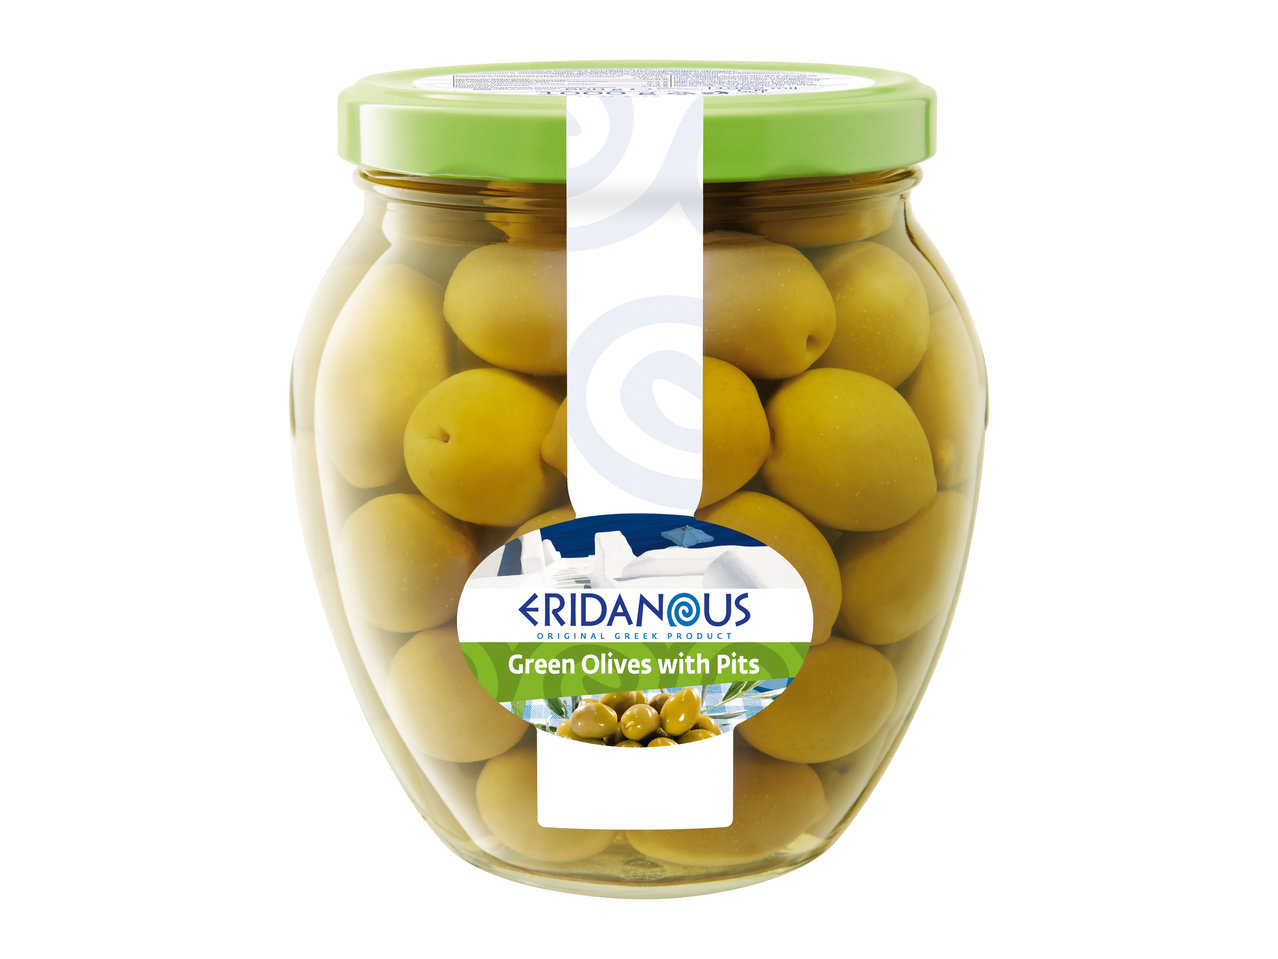 Olives vertes avec noyaux